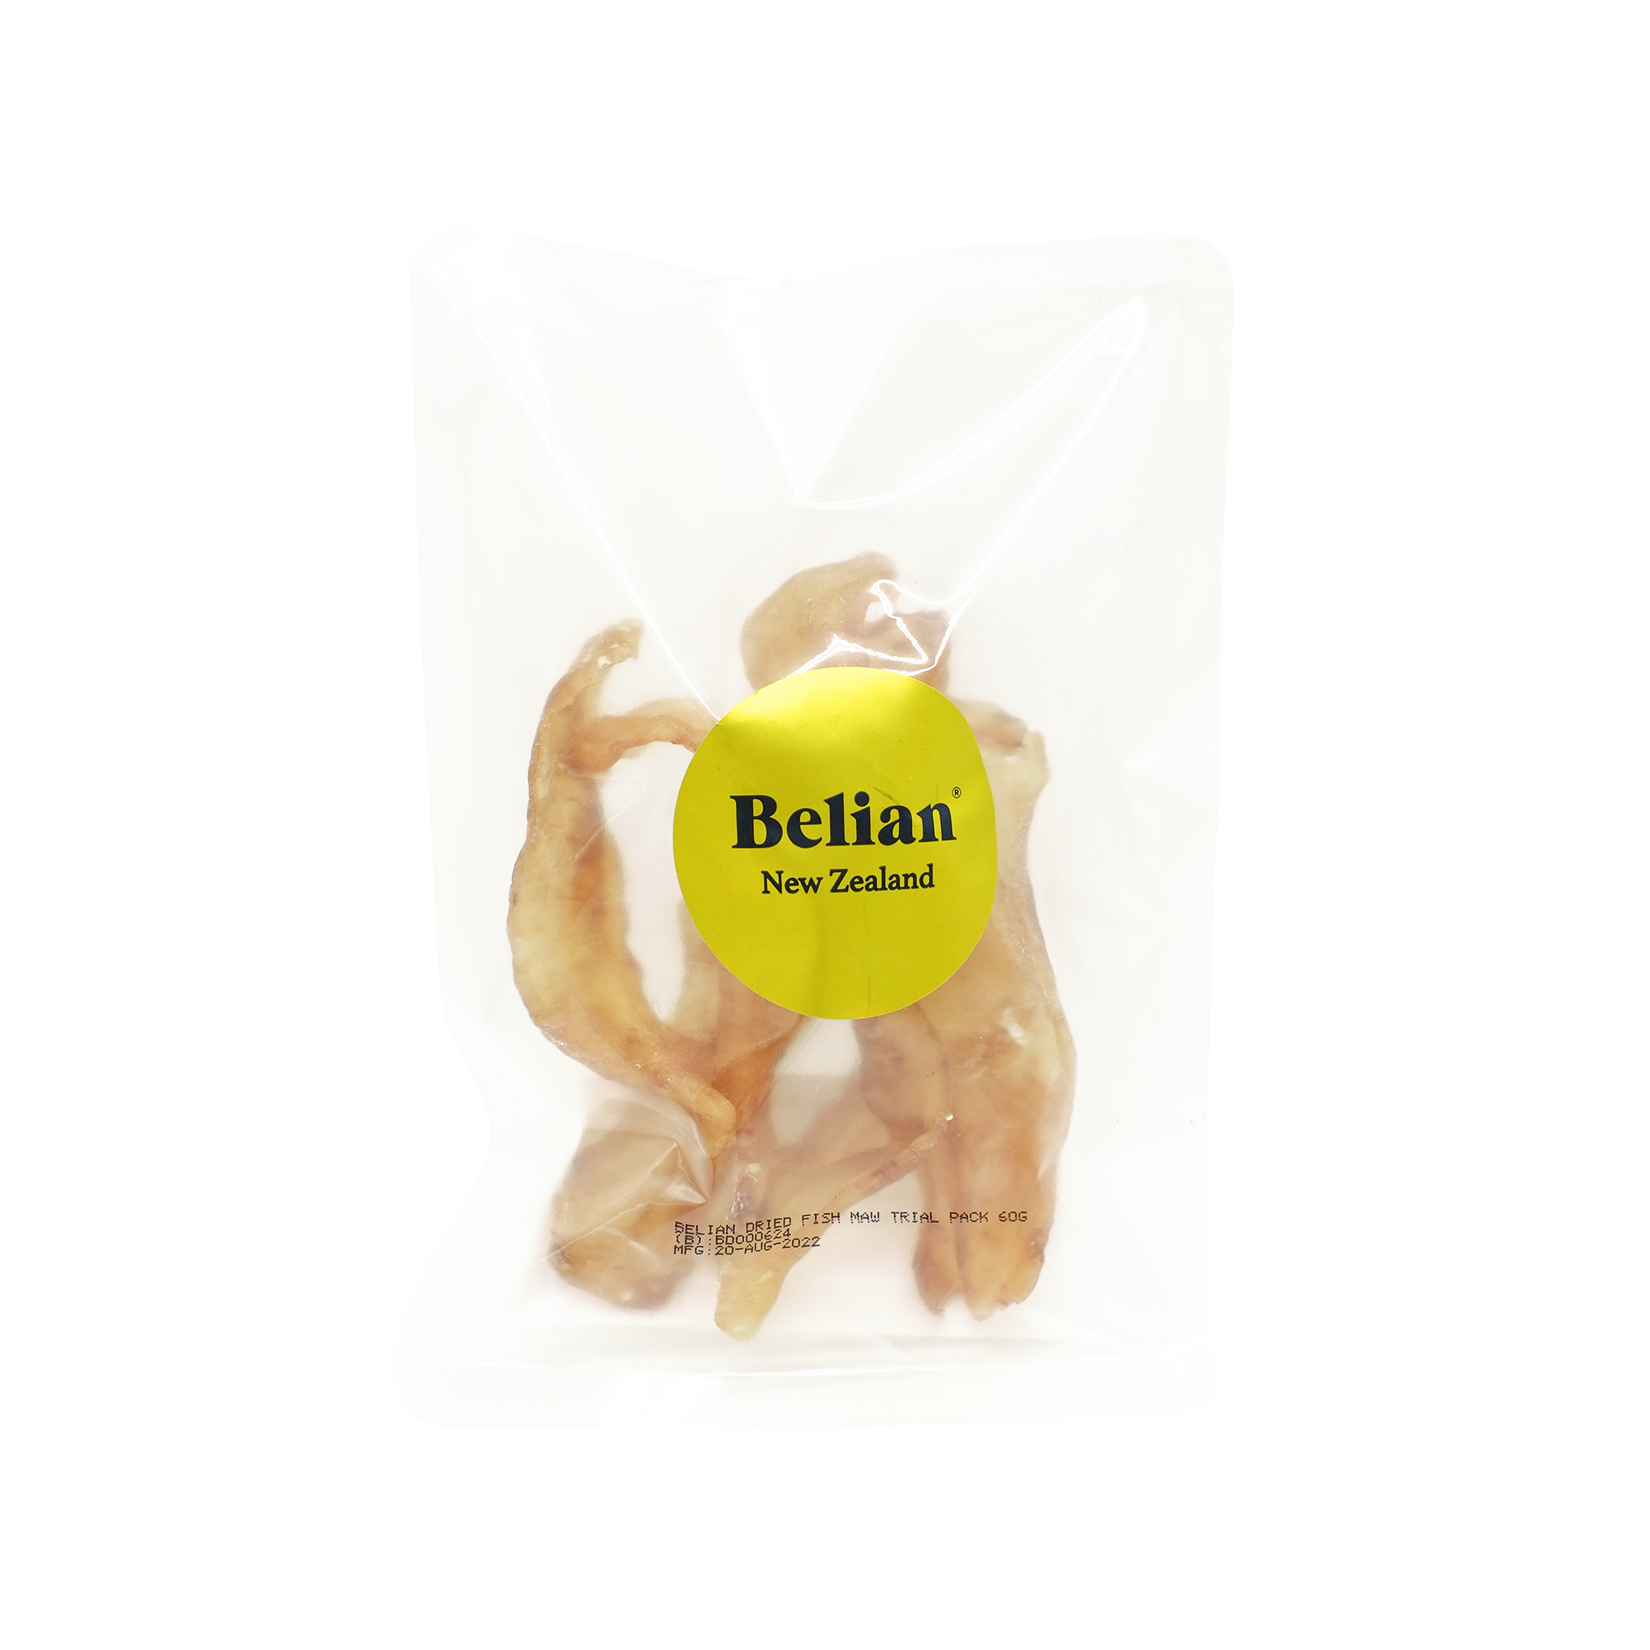 Belian® Dried Fish Maw Trial Pack 60g